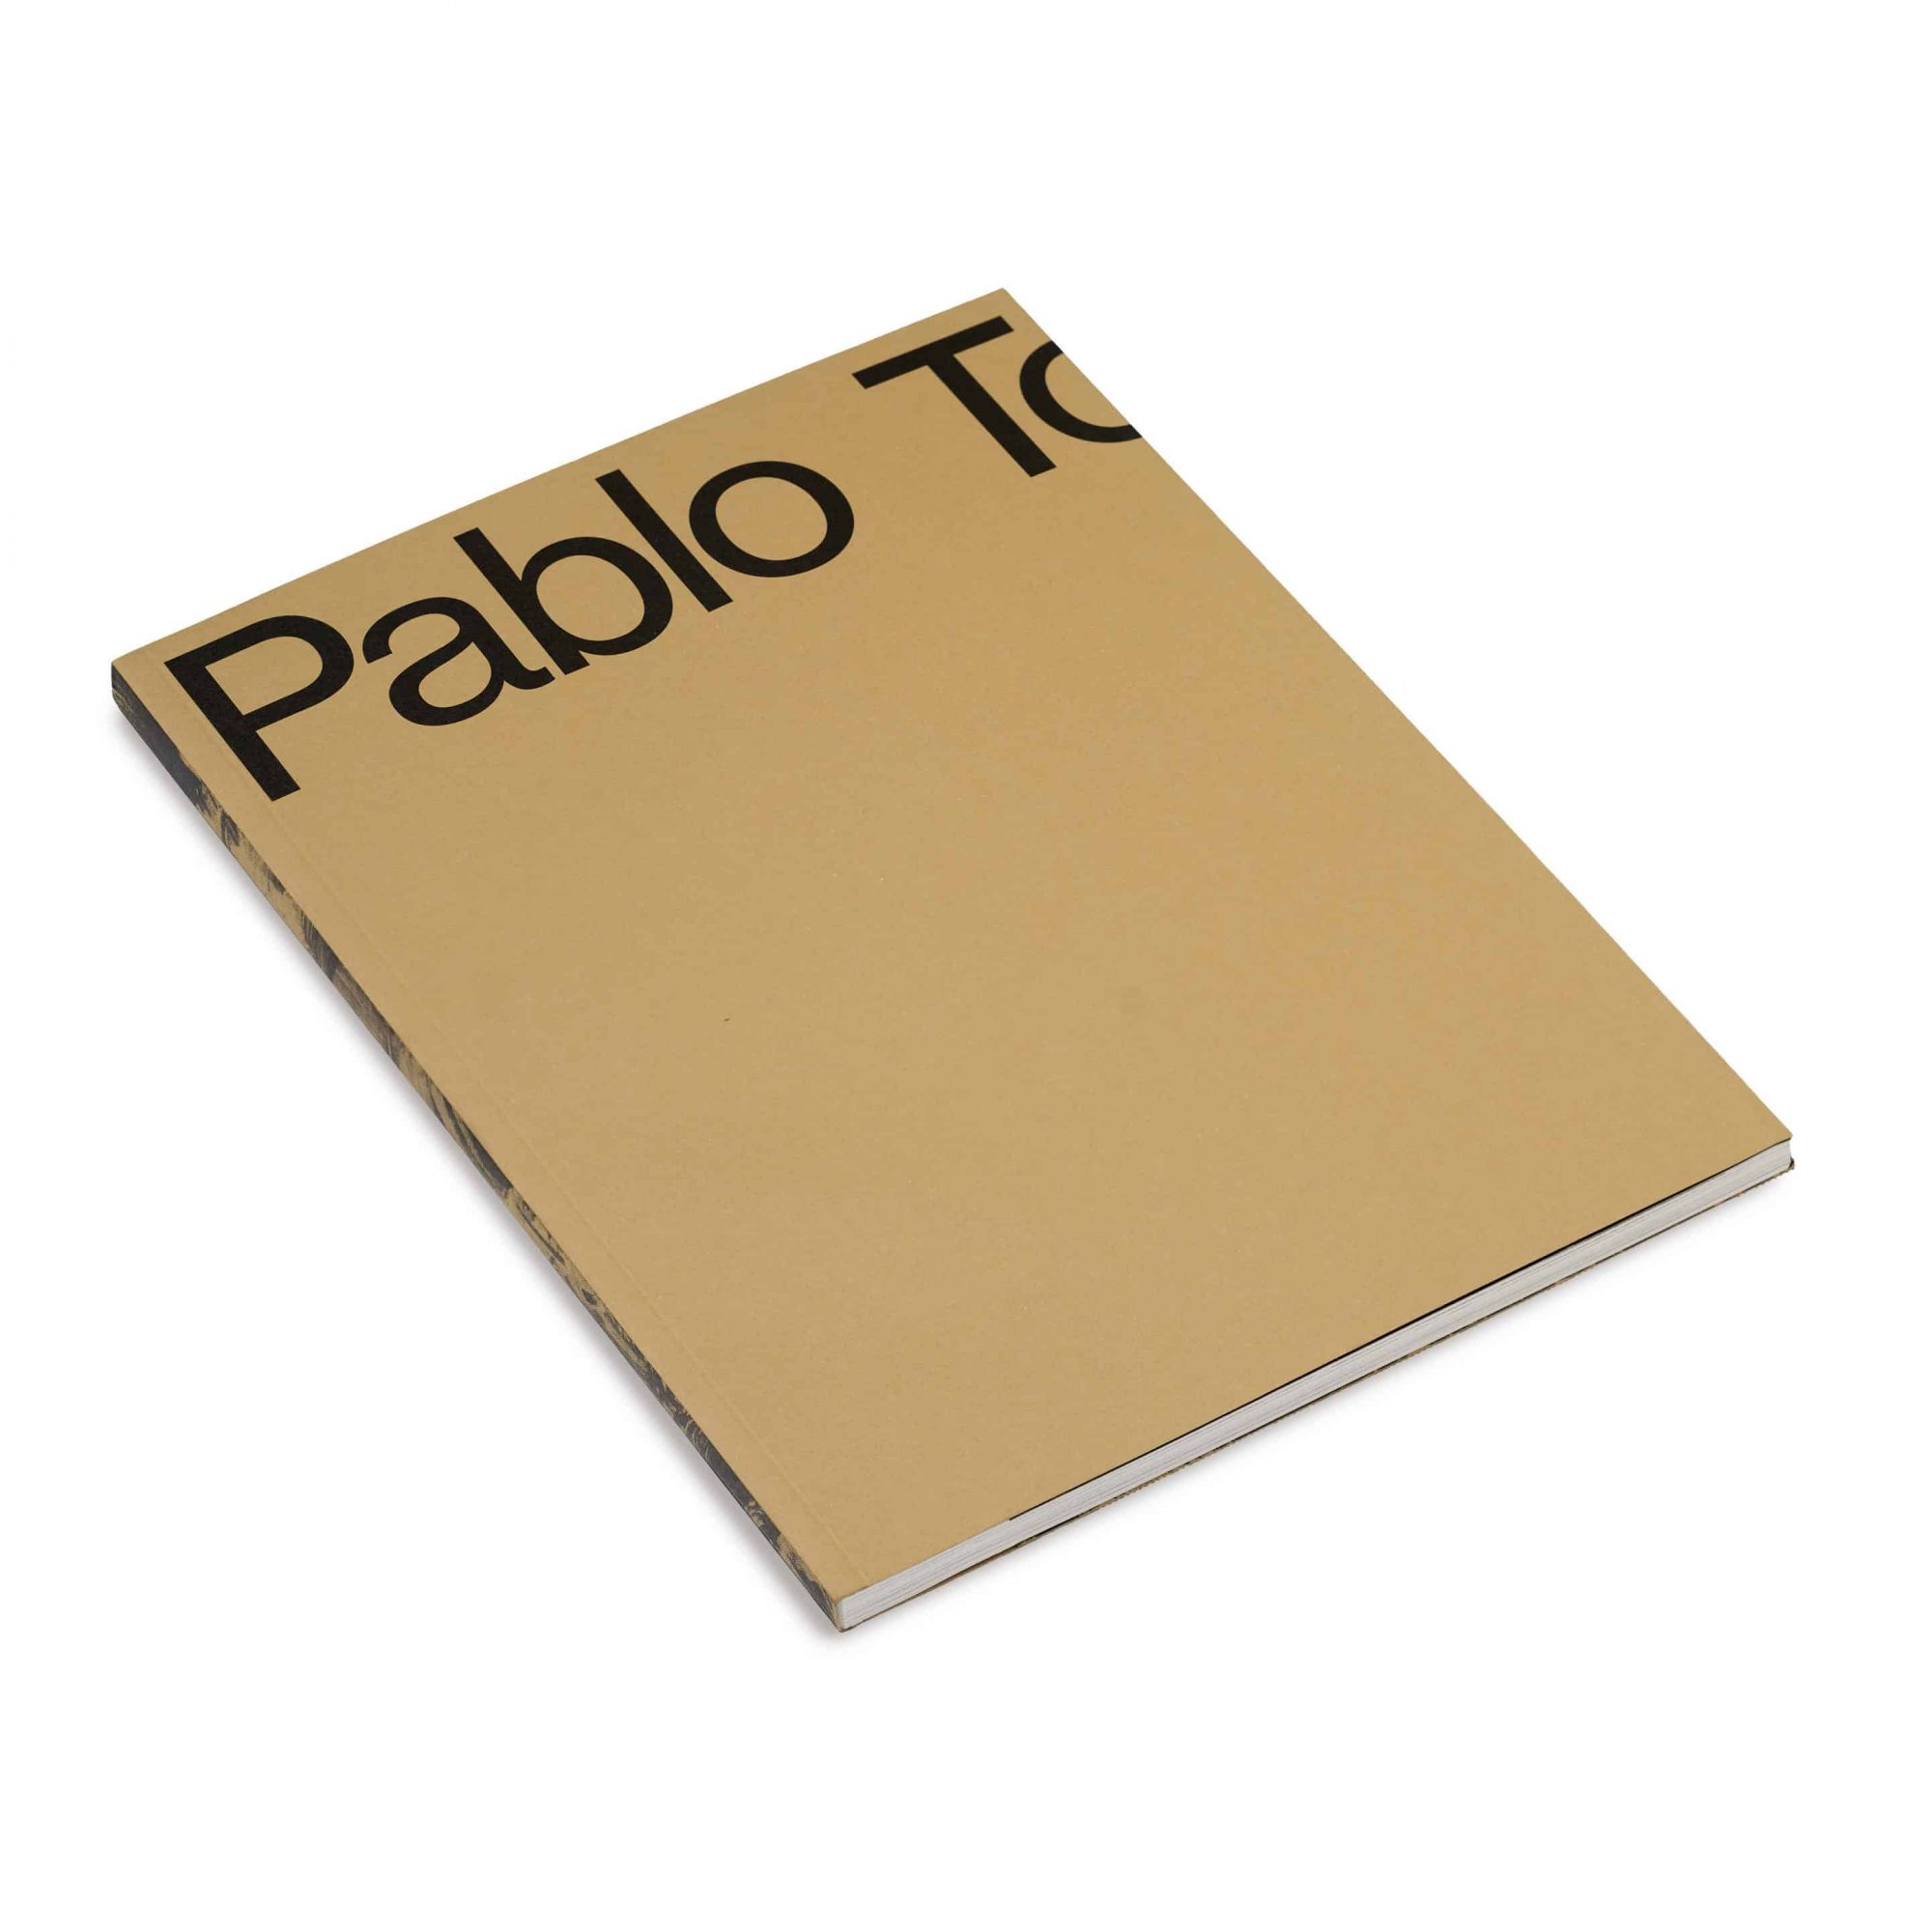 Pablo Tomek - Catalog